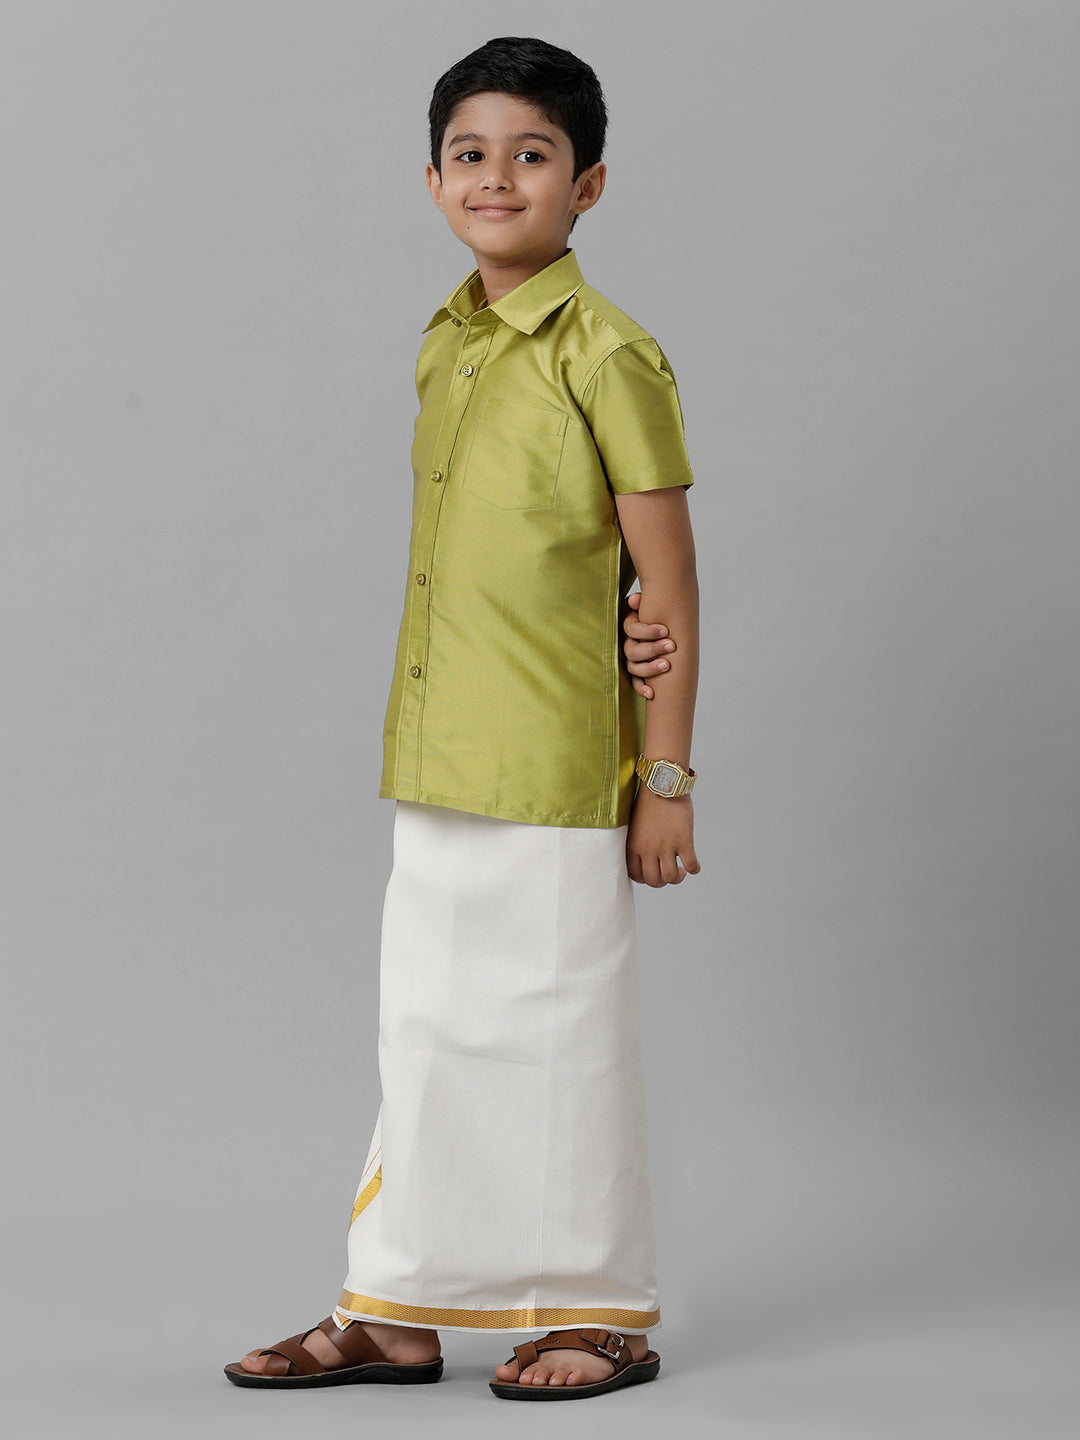 Boys Silk Cotton Lemon Green Half Sleeves Shirt with Adjustable Cream Dhoti Combo K44-Side view